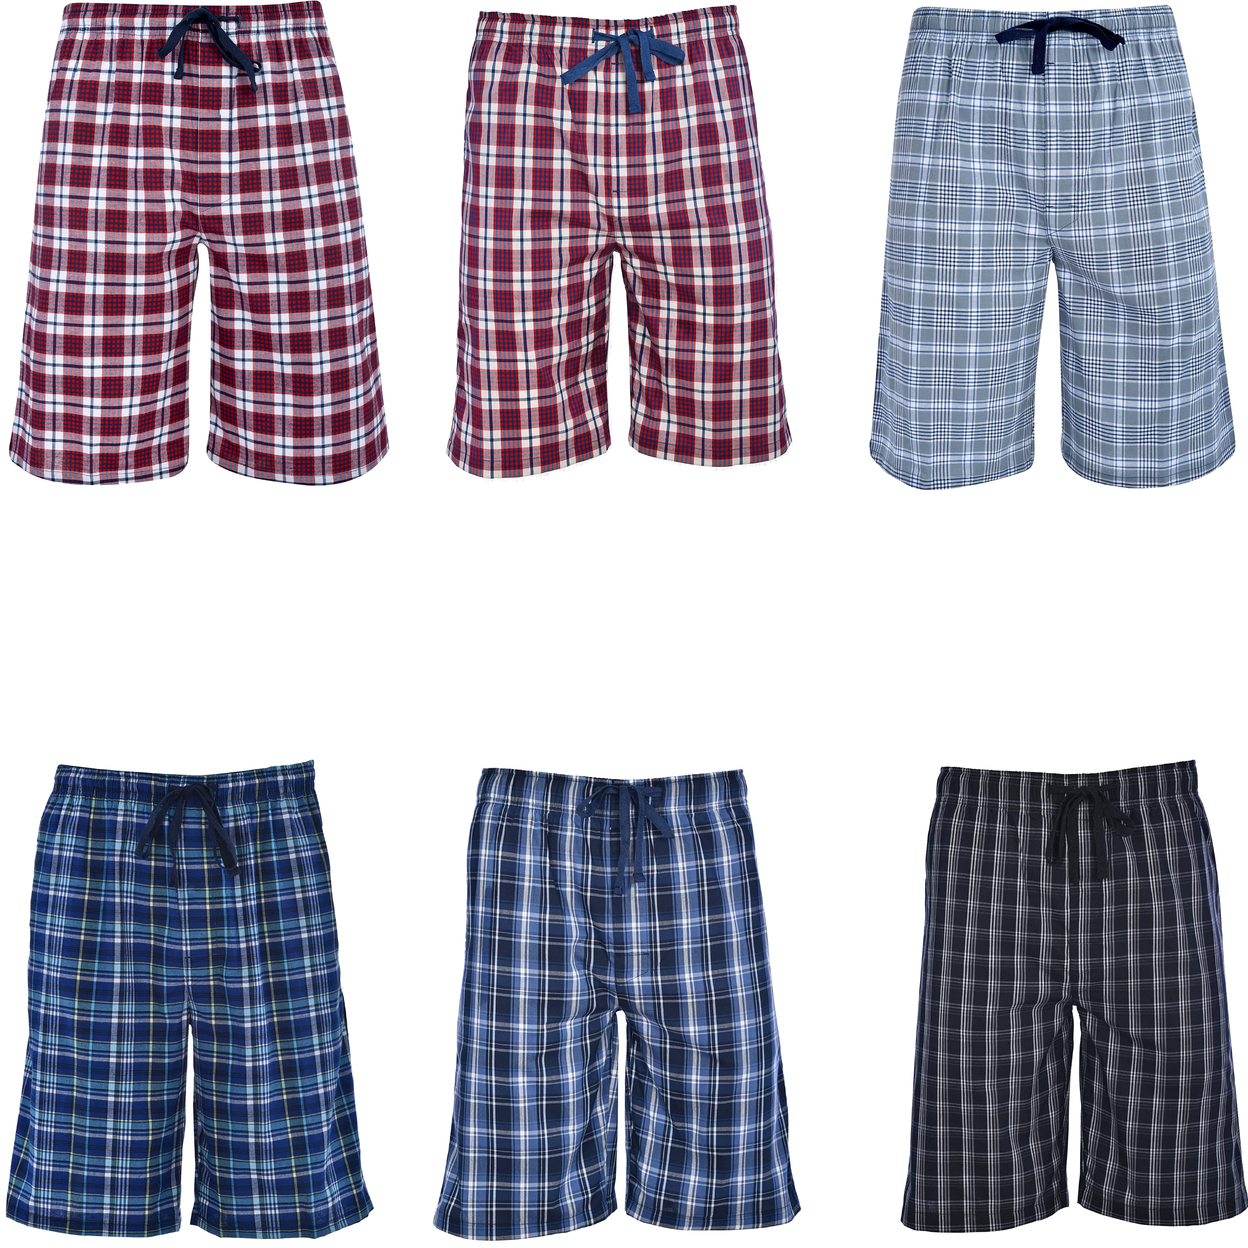 5-Pack: Men's Ultra Soft Plaid Lounge Pajama Sleep Wear Shorts - Small